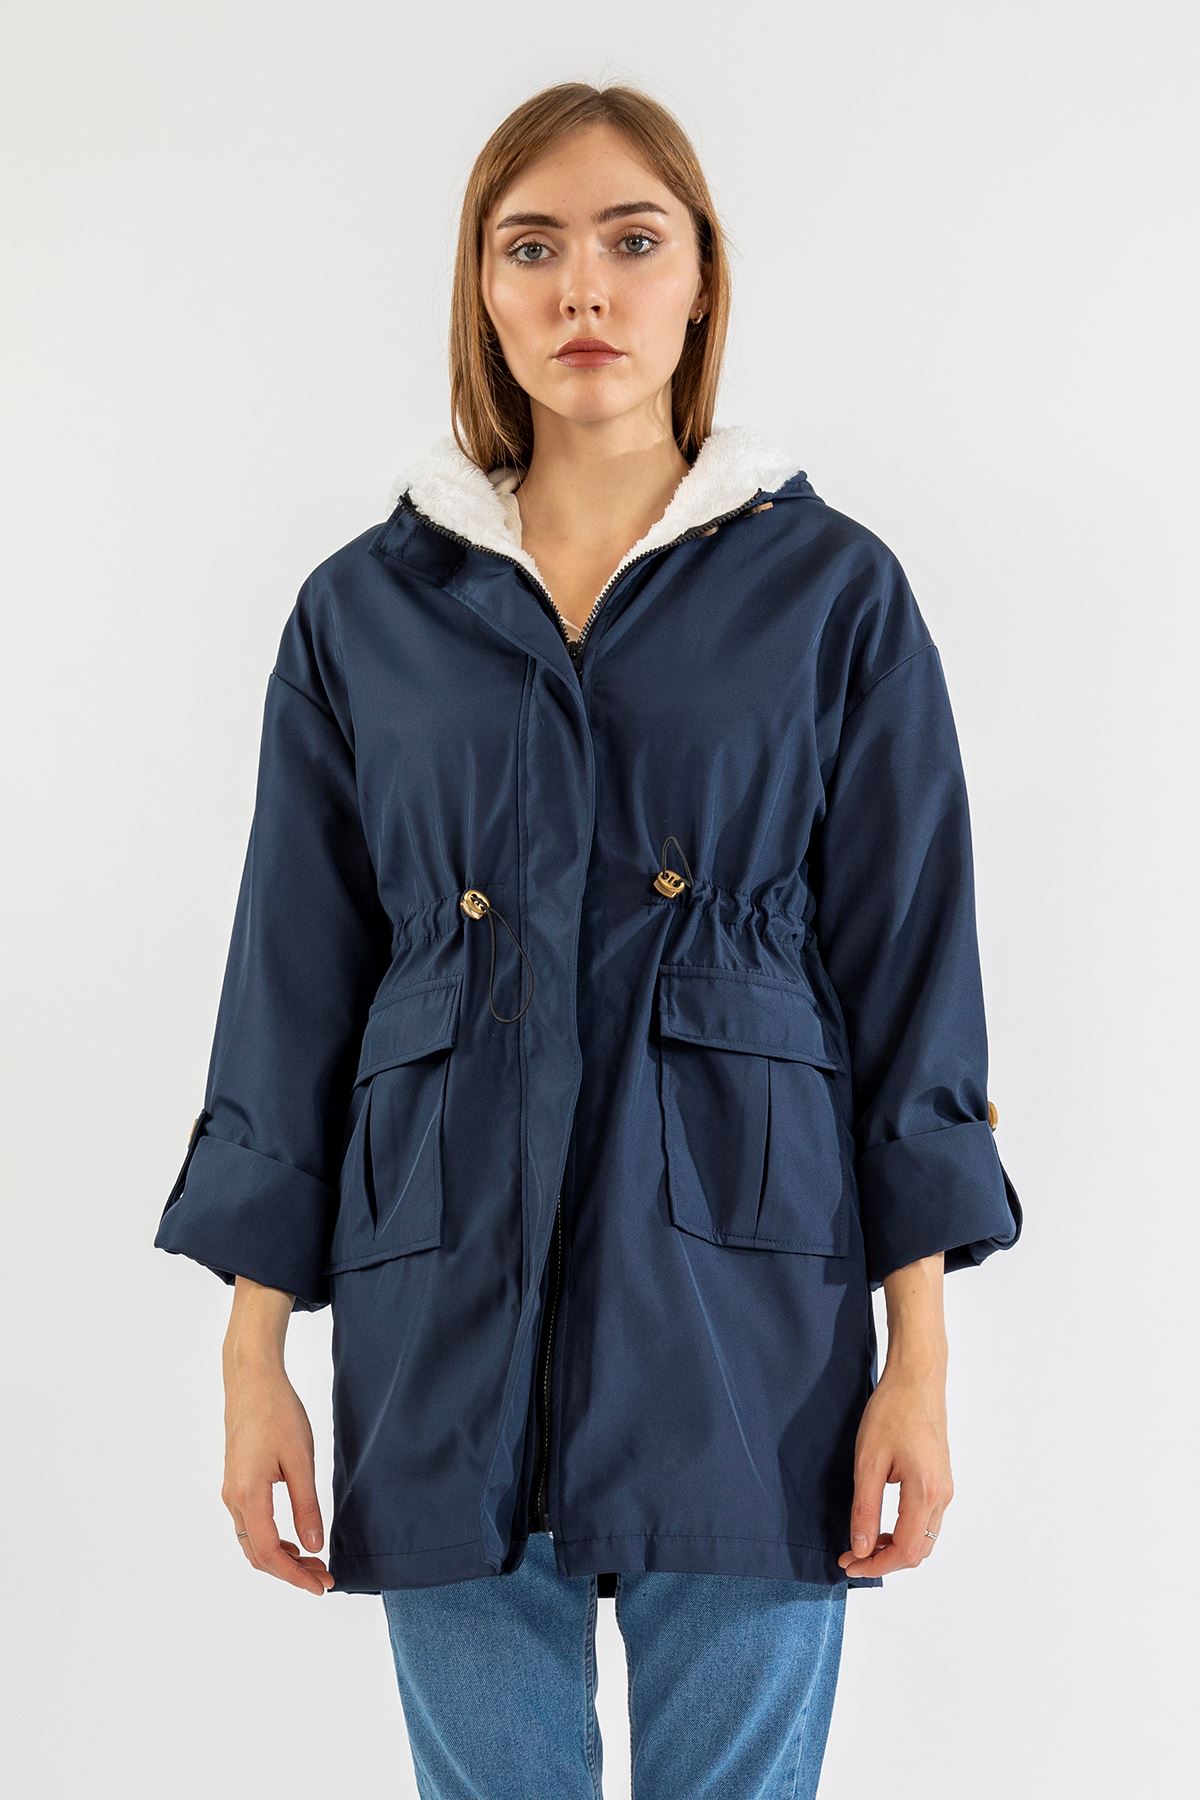 Long Sleeve Hooded Hip Height Oversize Plush Women Raincoat - Navy Blue 